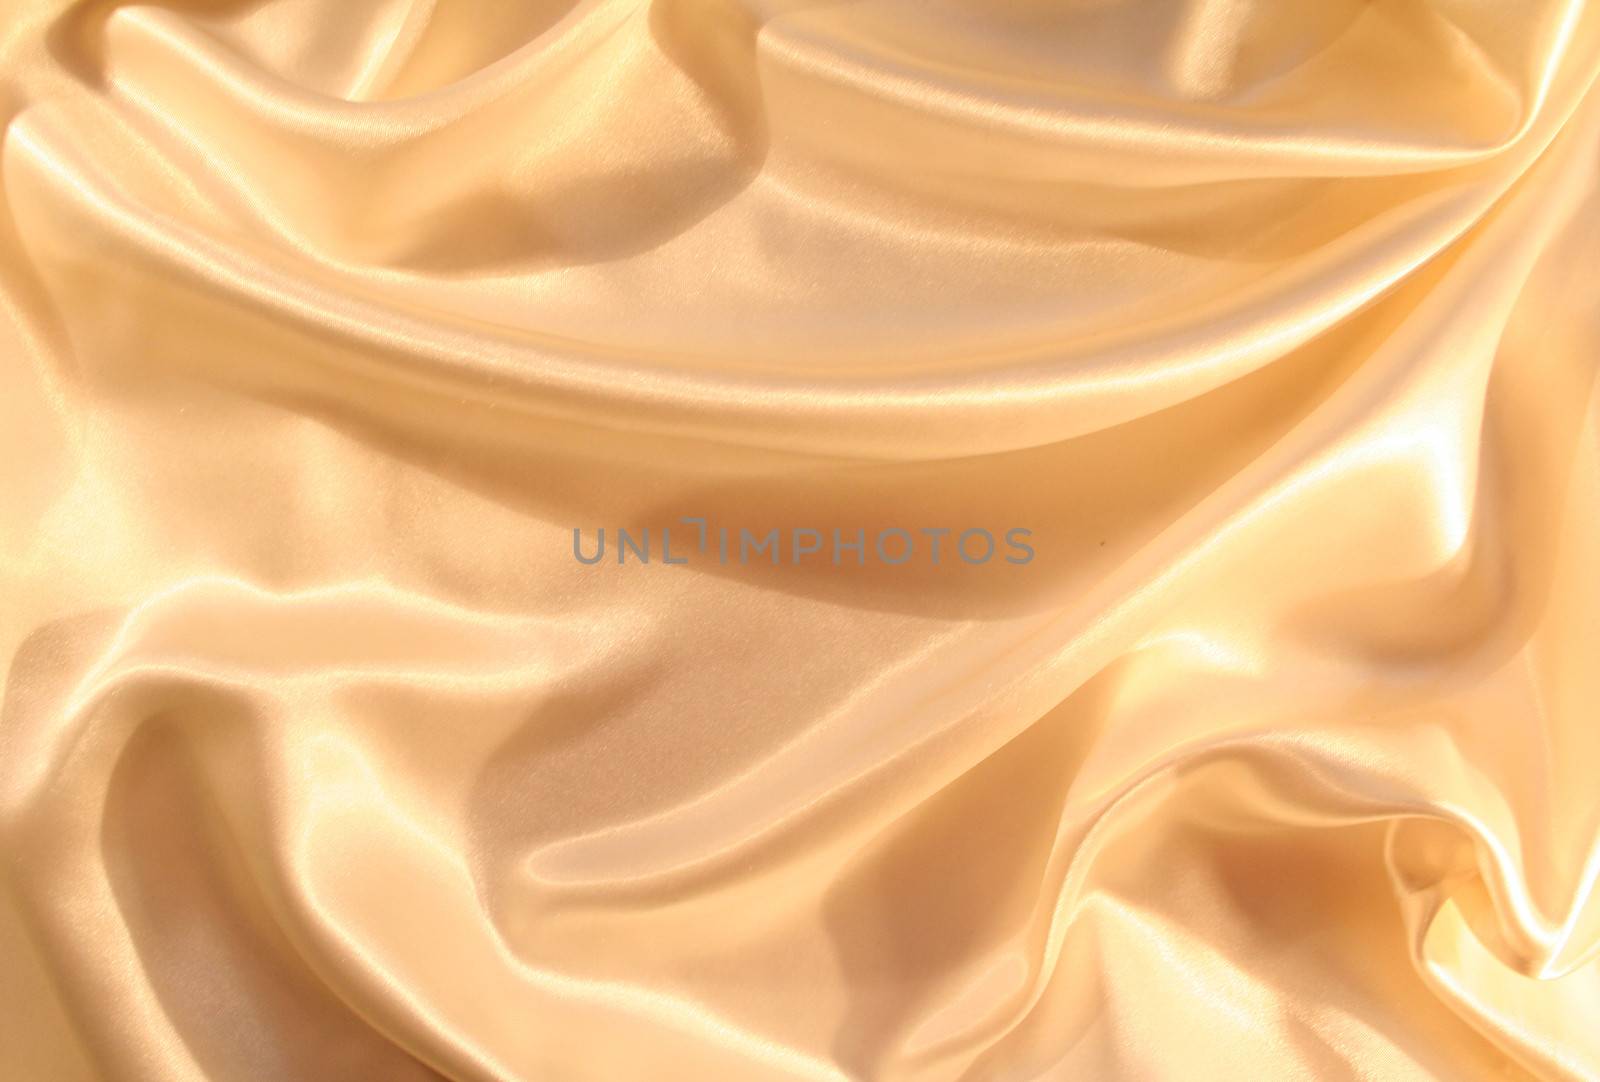 Smooth elegant golden silk as background by oxanatravel